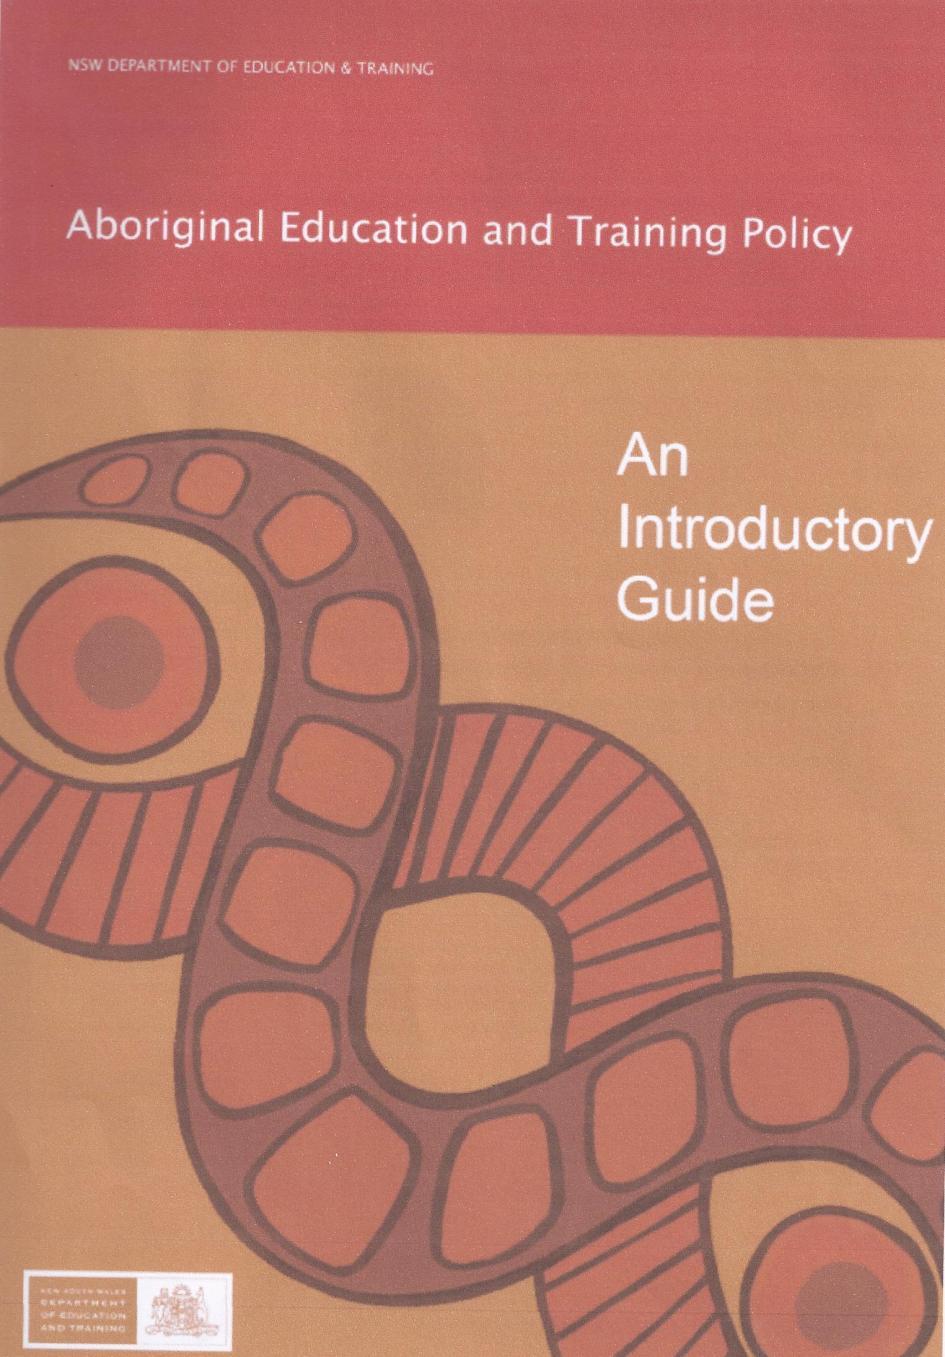 APPENDIX 3 FIGURE 14 Figure 14 - The NSW Department of Education and Training [DET] Aboriginal